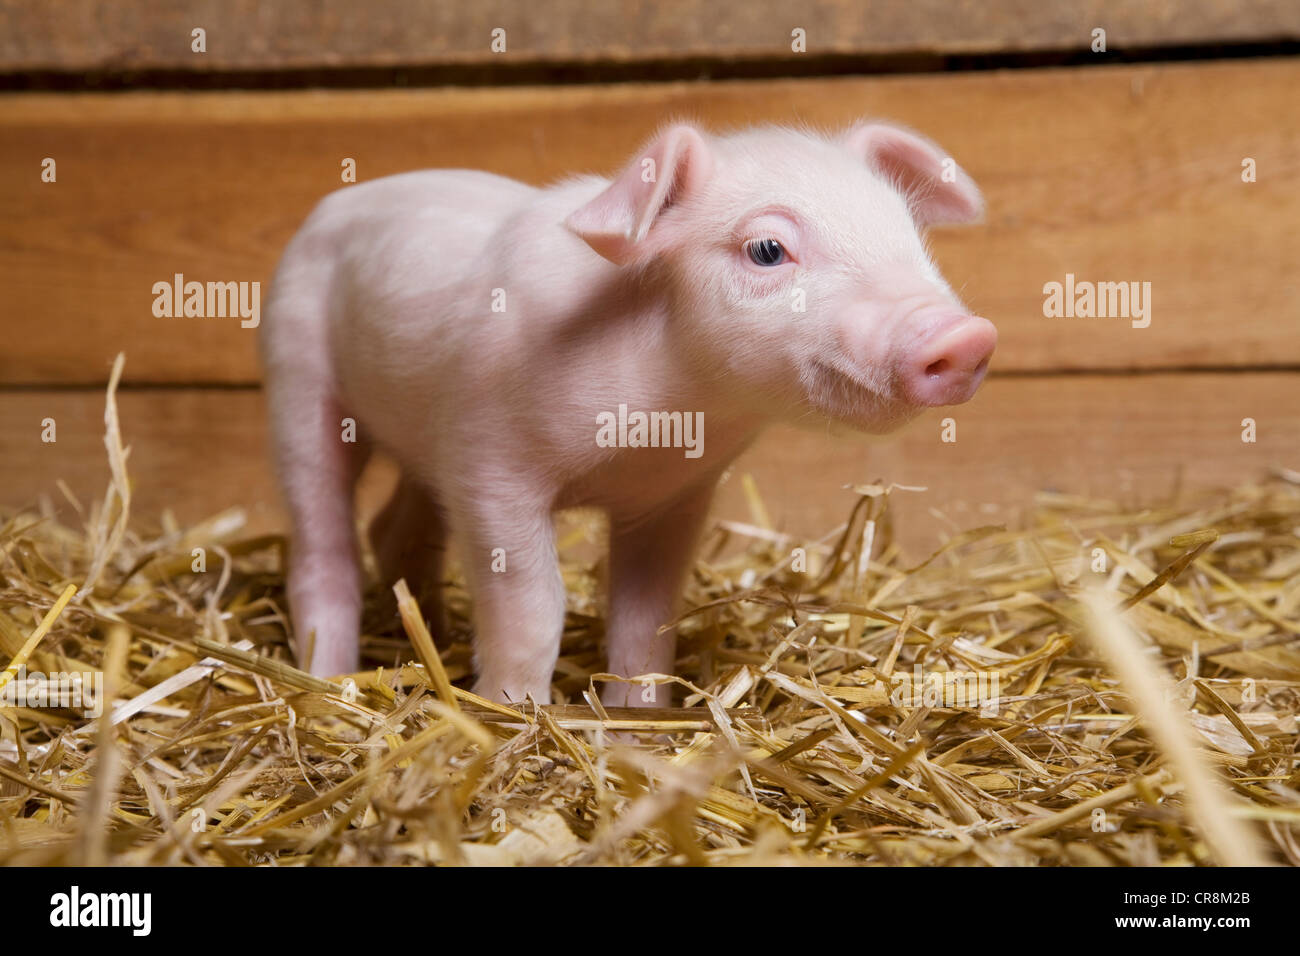 Piglet on straw Stock Photo